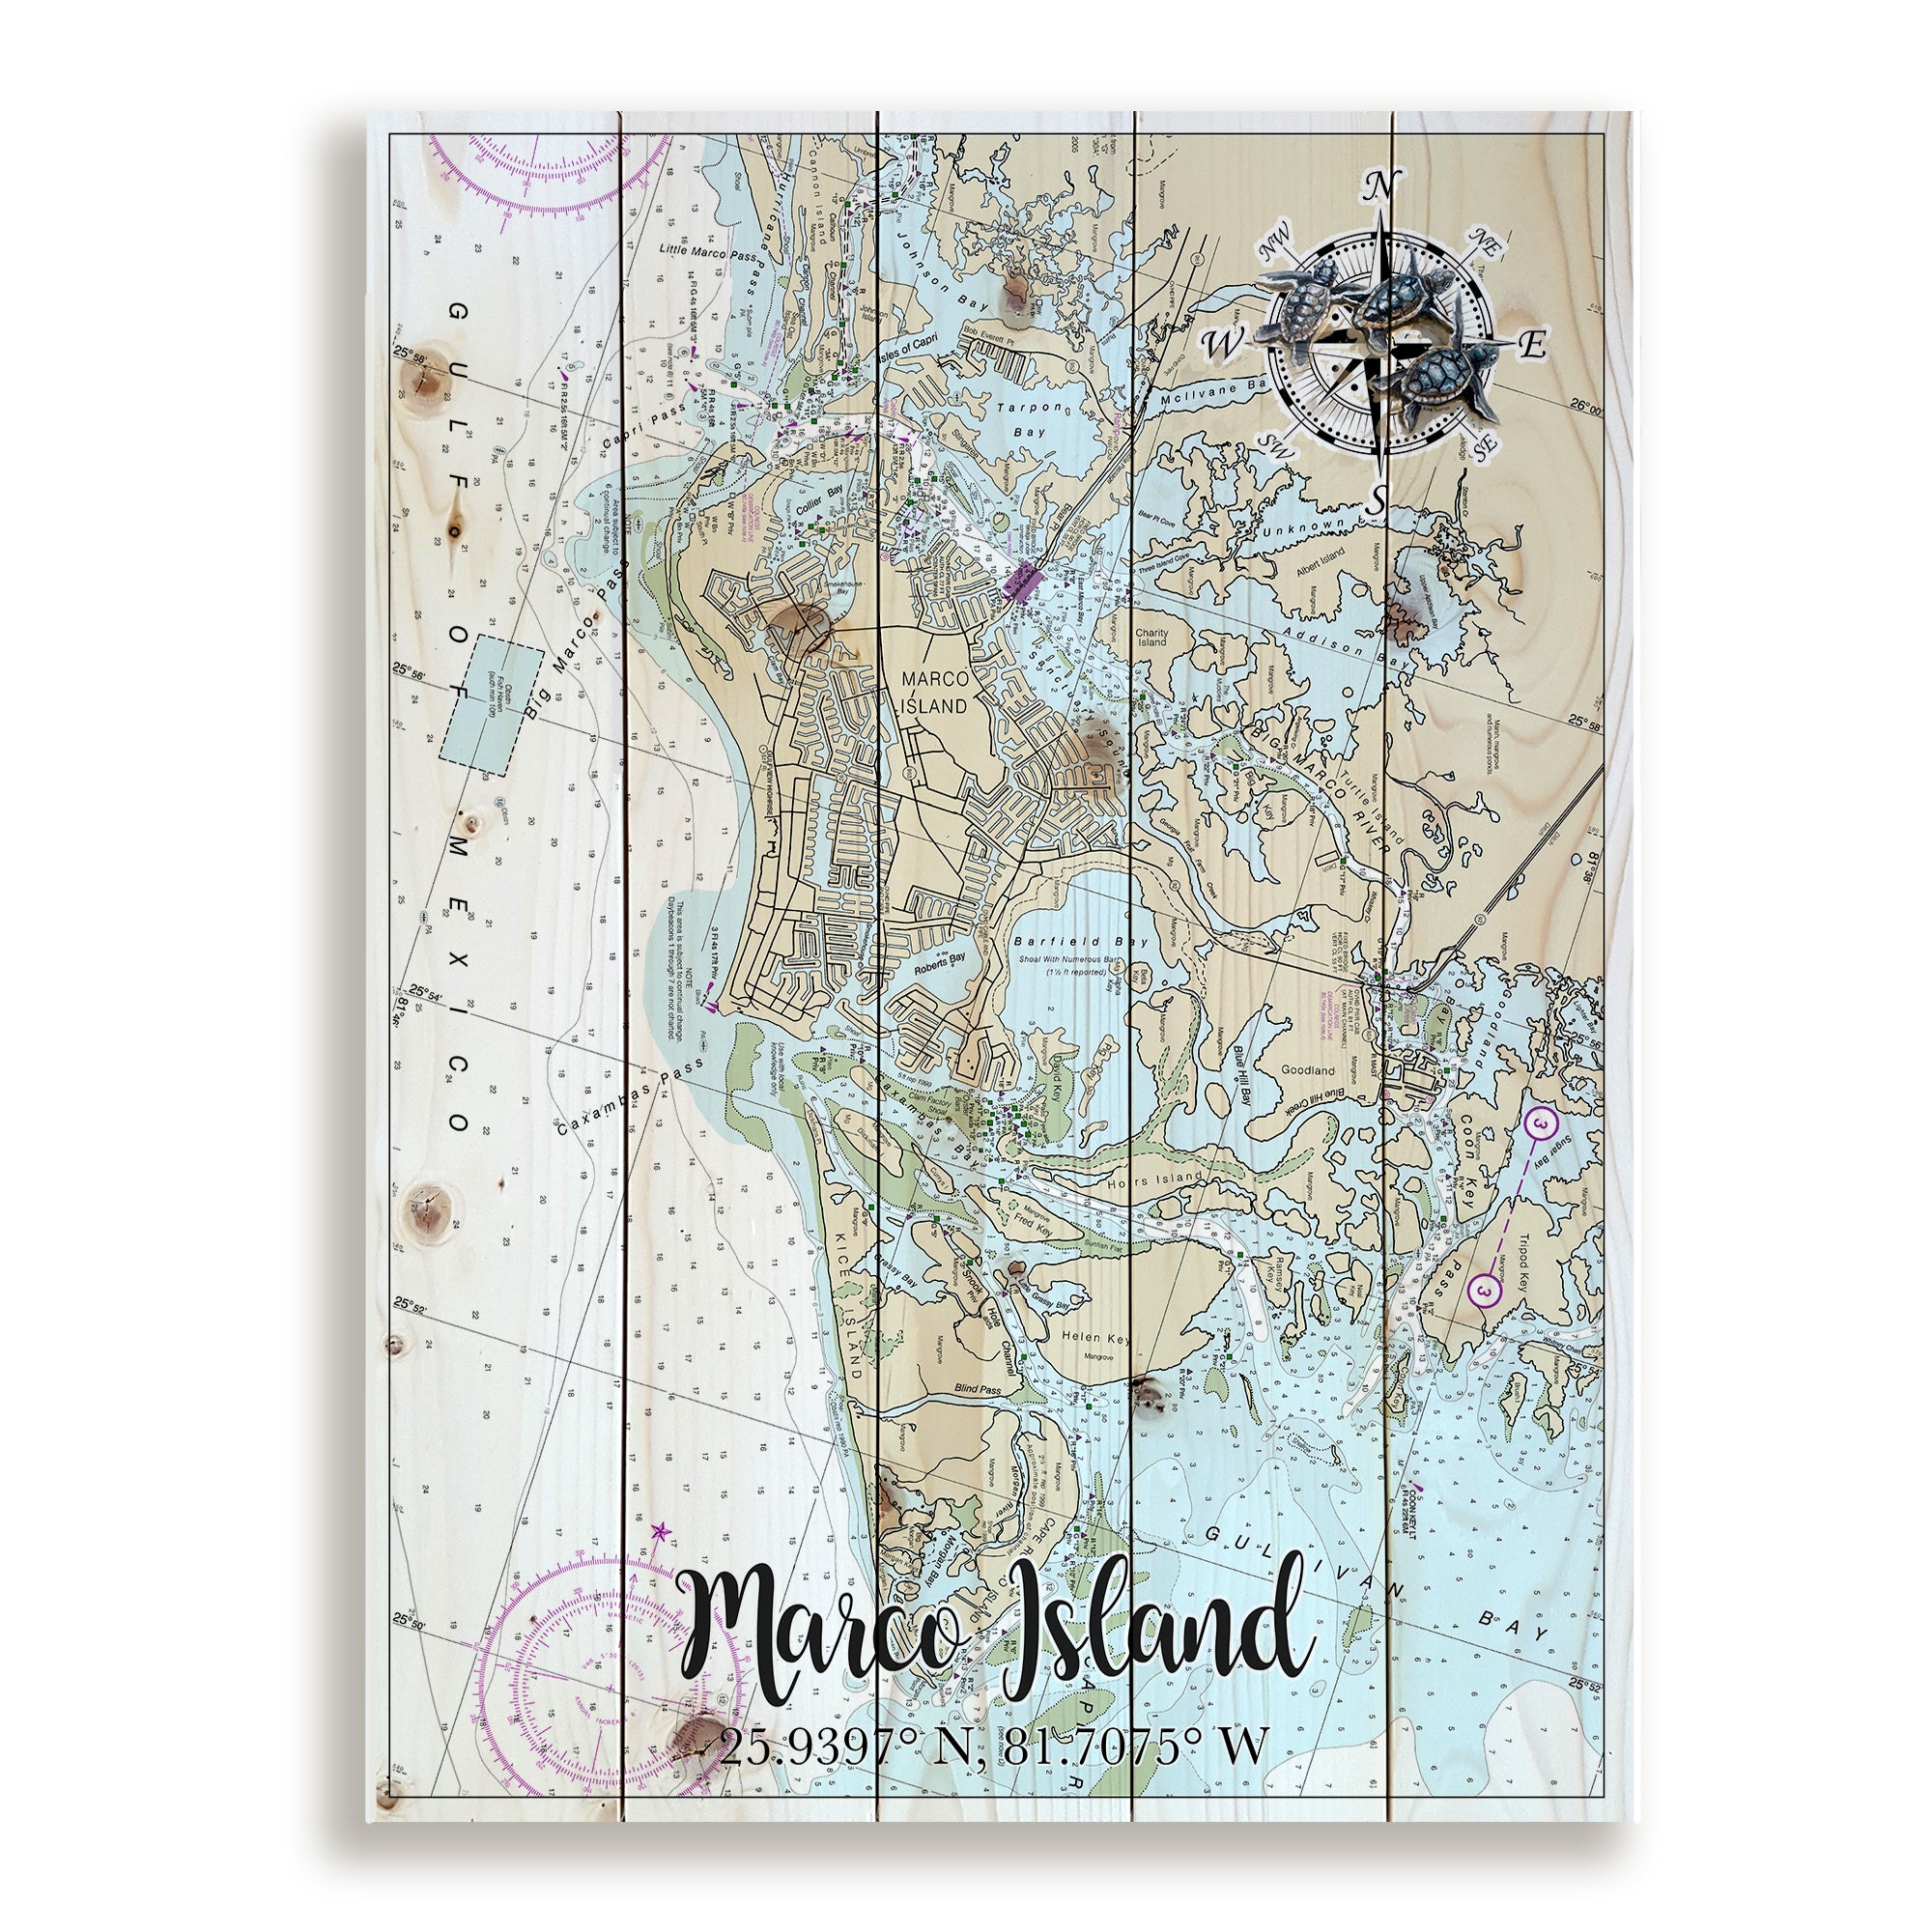 Marco Island, FL  Pallet Map